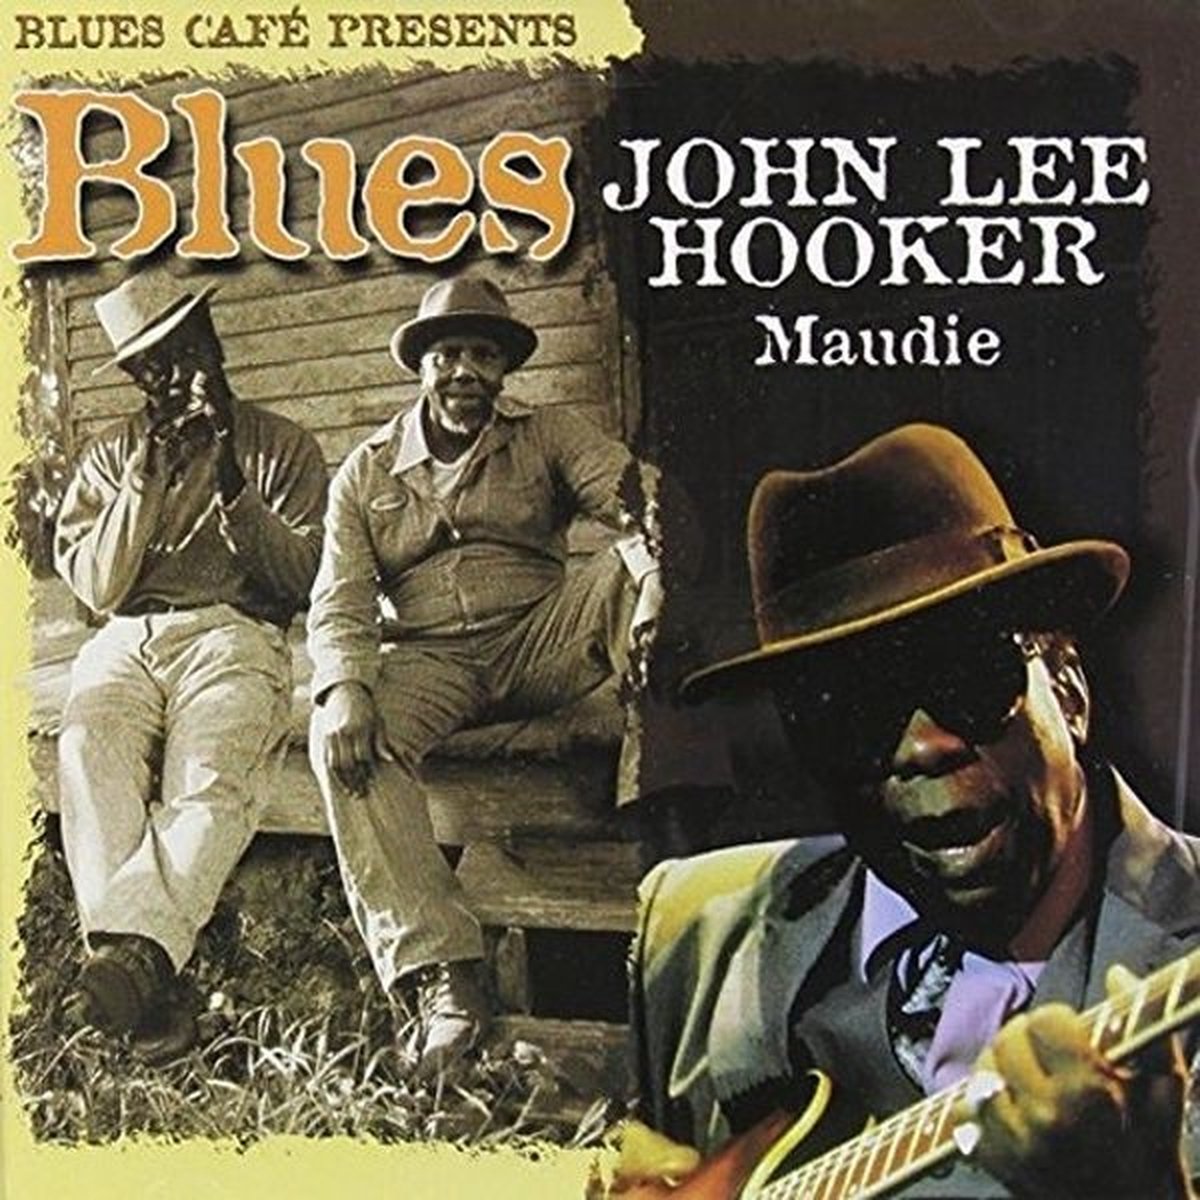 John Lee Hooker - Blues Cafe Presents Maudie (CD) - John Lee Hooker